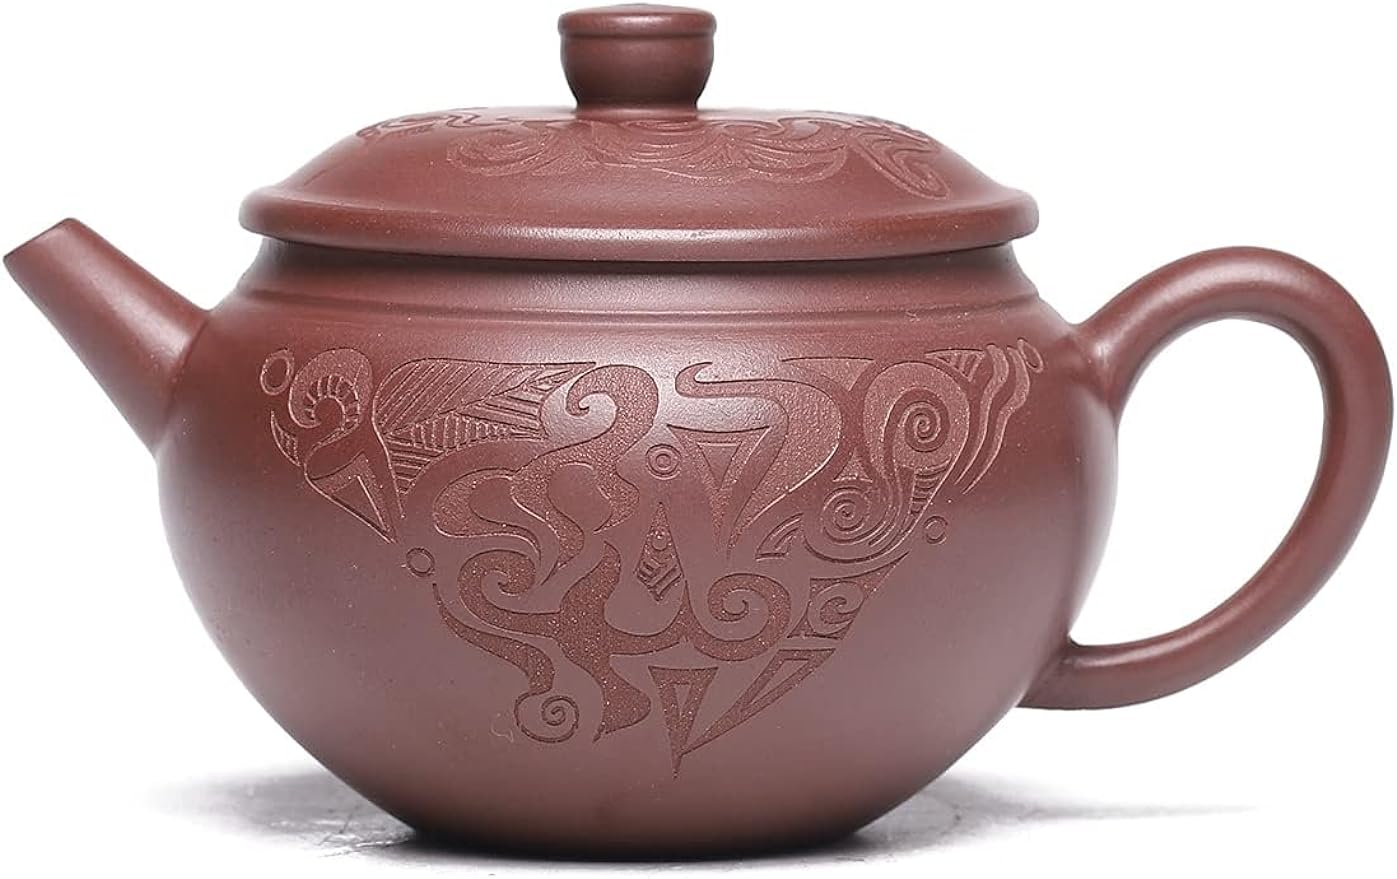 SILINE Zisha Teapot,Chinese Yixing Clay Handmade Purple Teapot 7.8 Oz, Infuse Brew Kung Fu Loose Leaf Tea Maker -Hanwa,Purple Clay